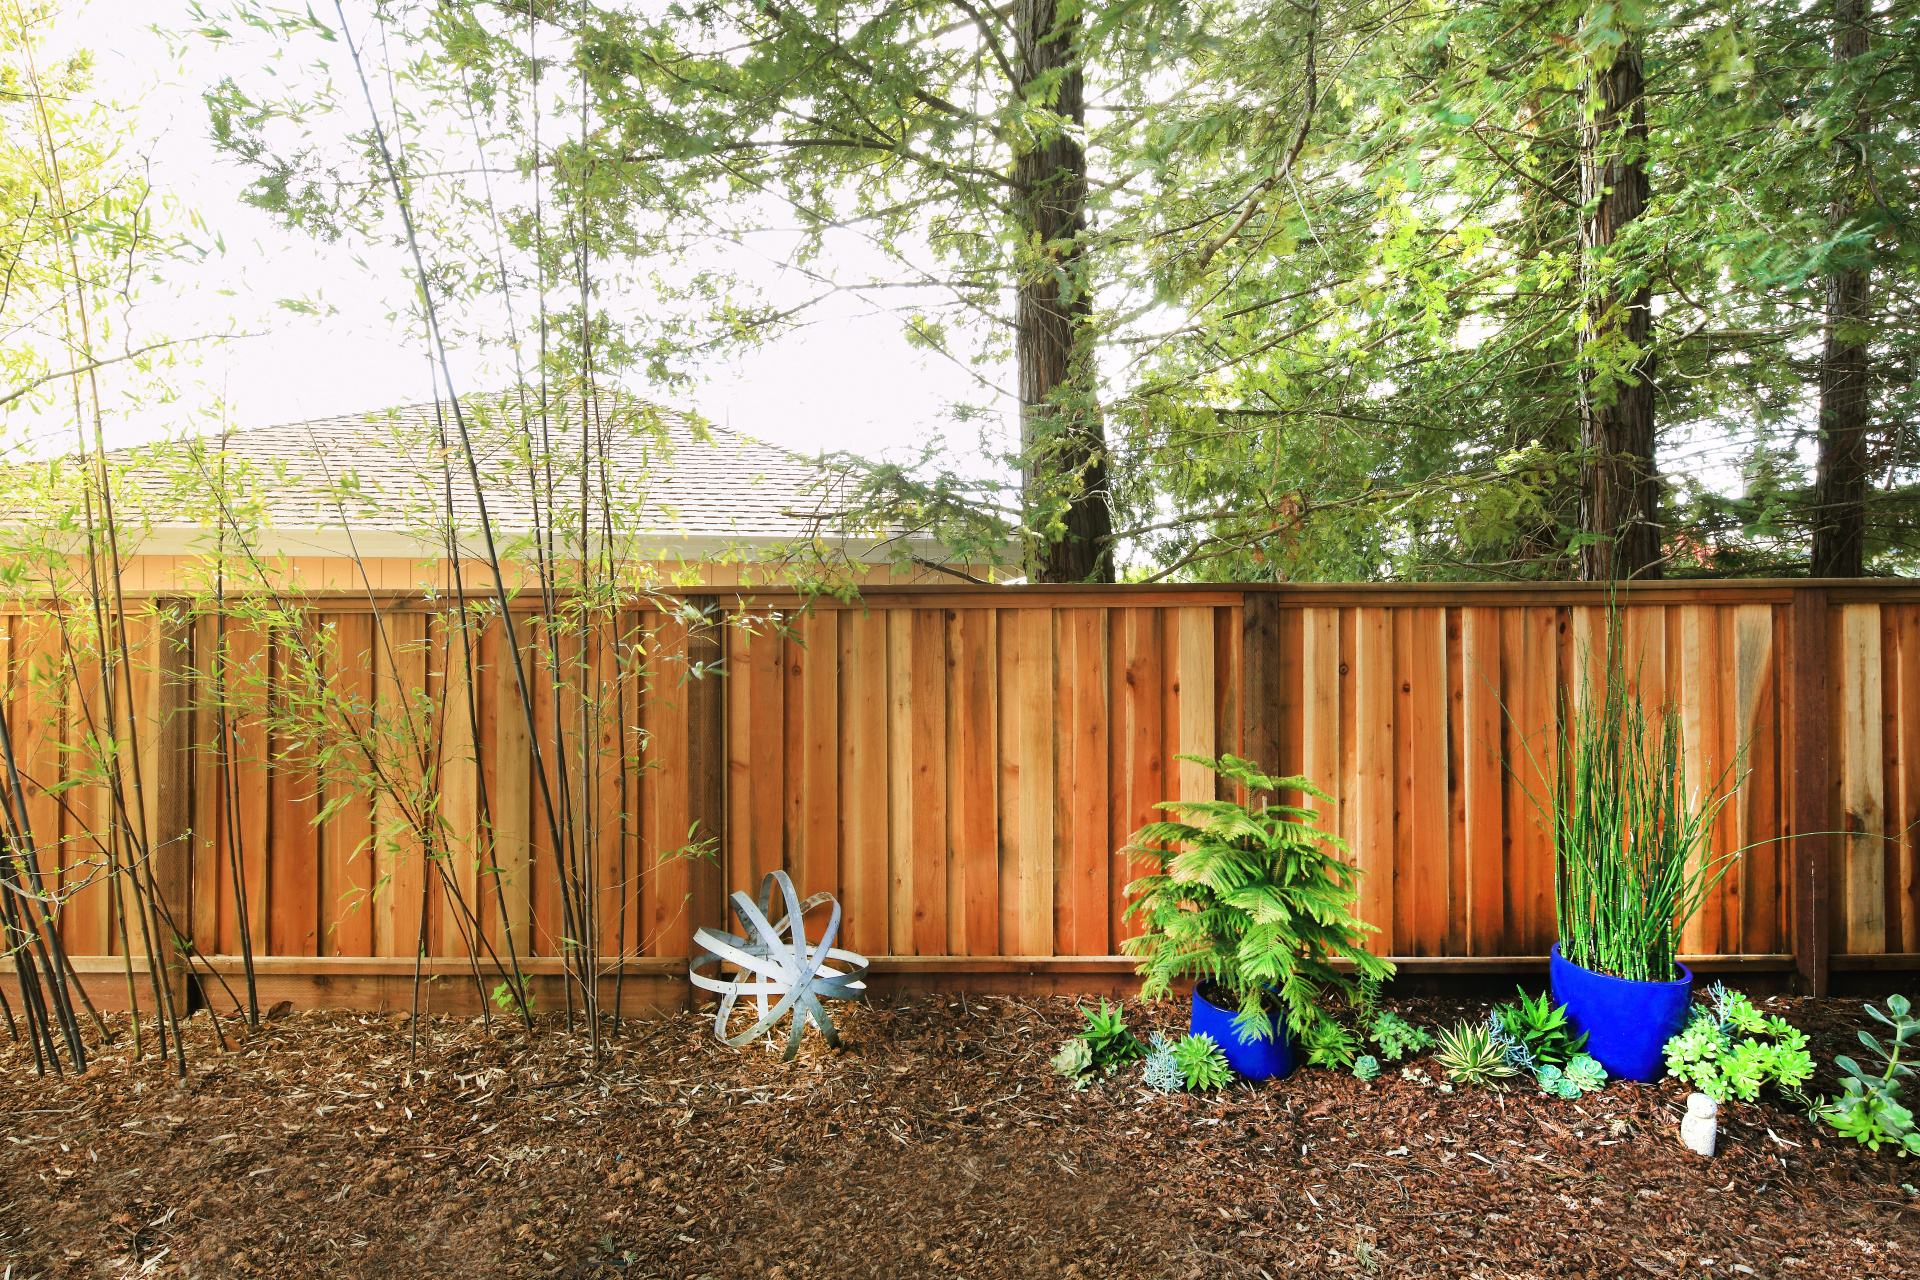 Redwood Fence